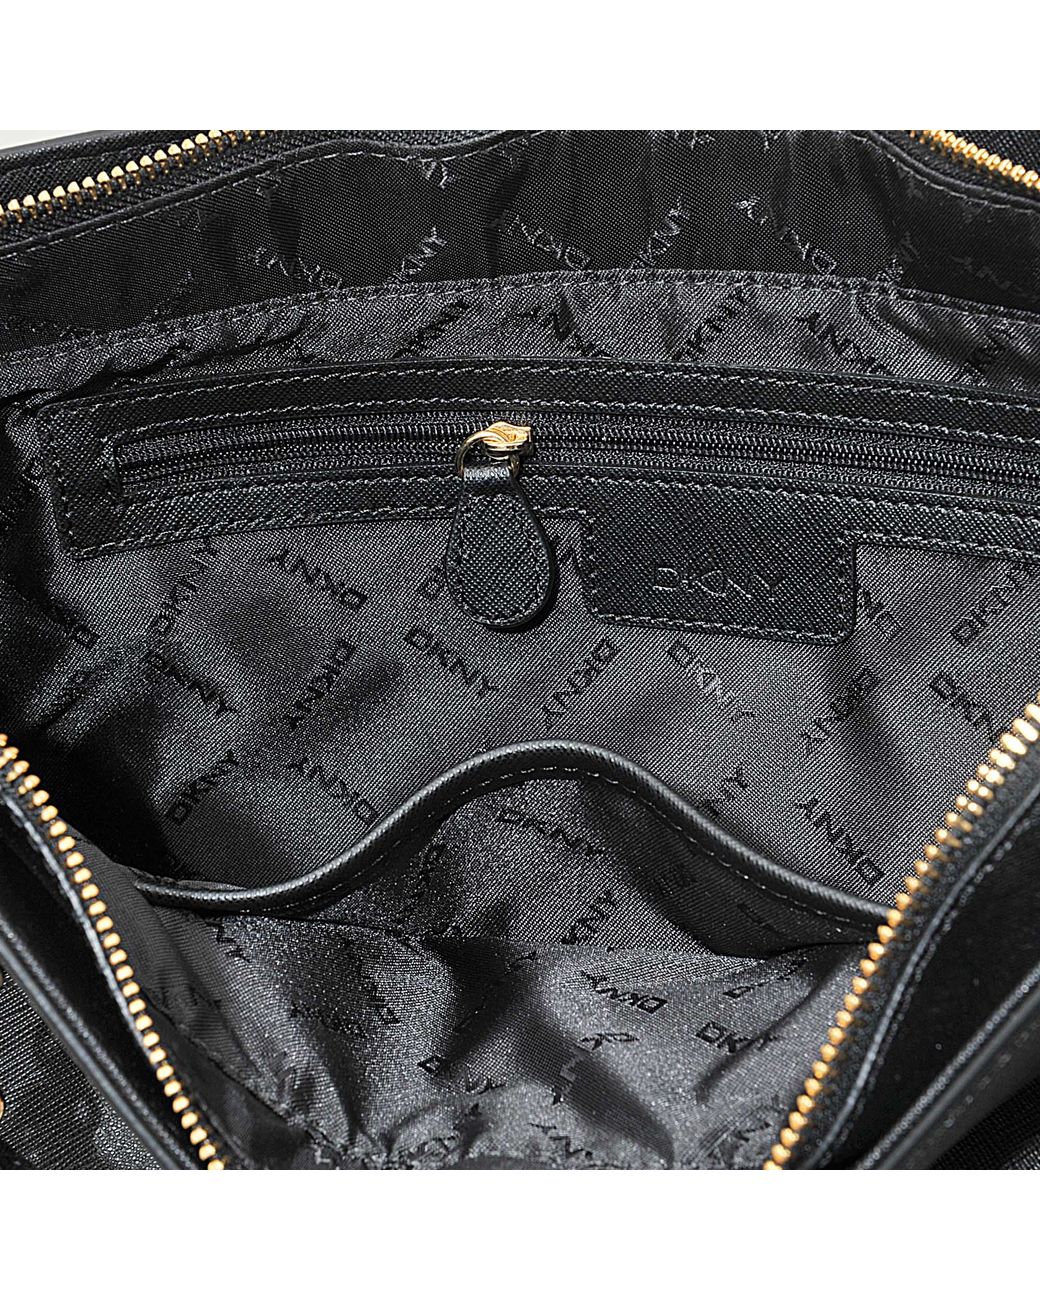 DKNY Bryant Park Shopper Bag in Black | Lyst